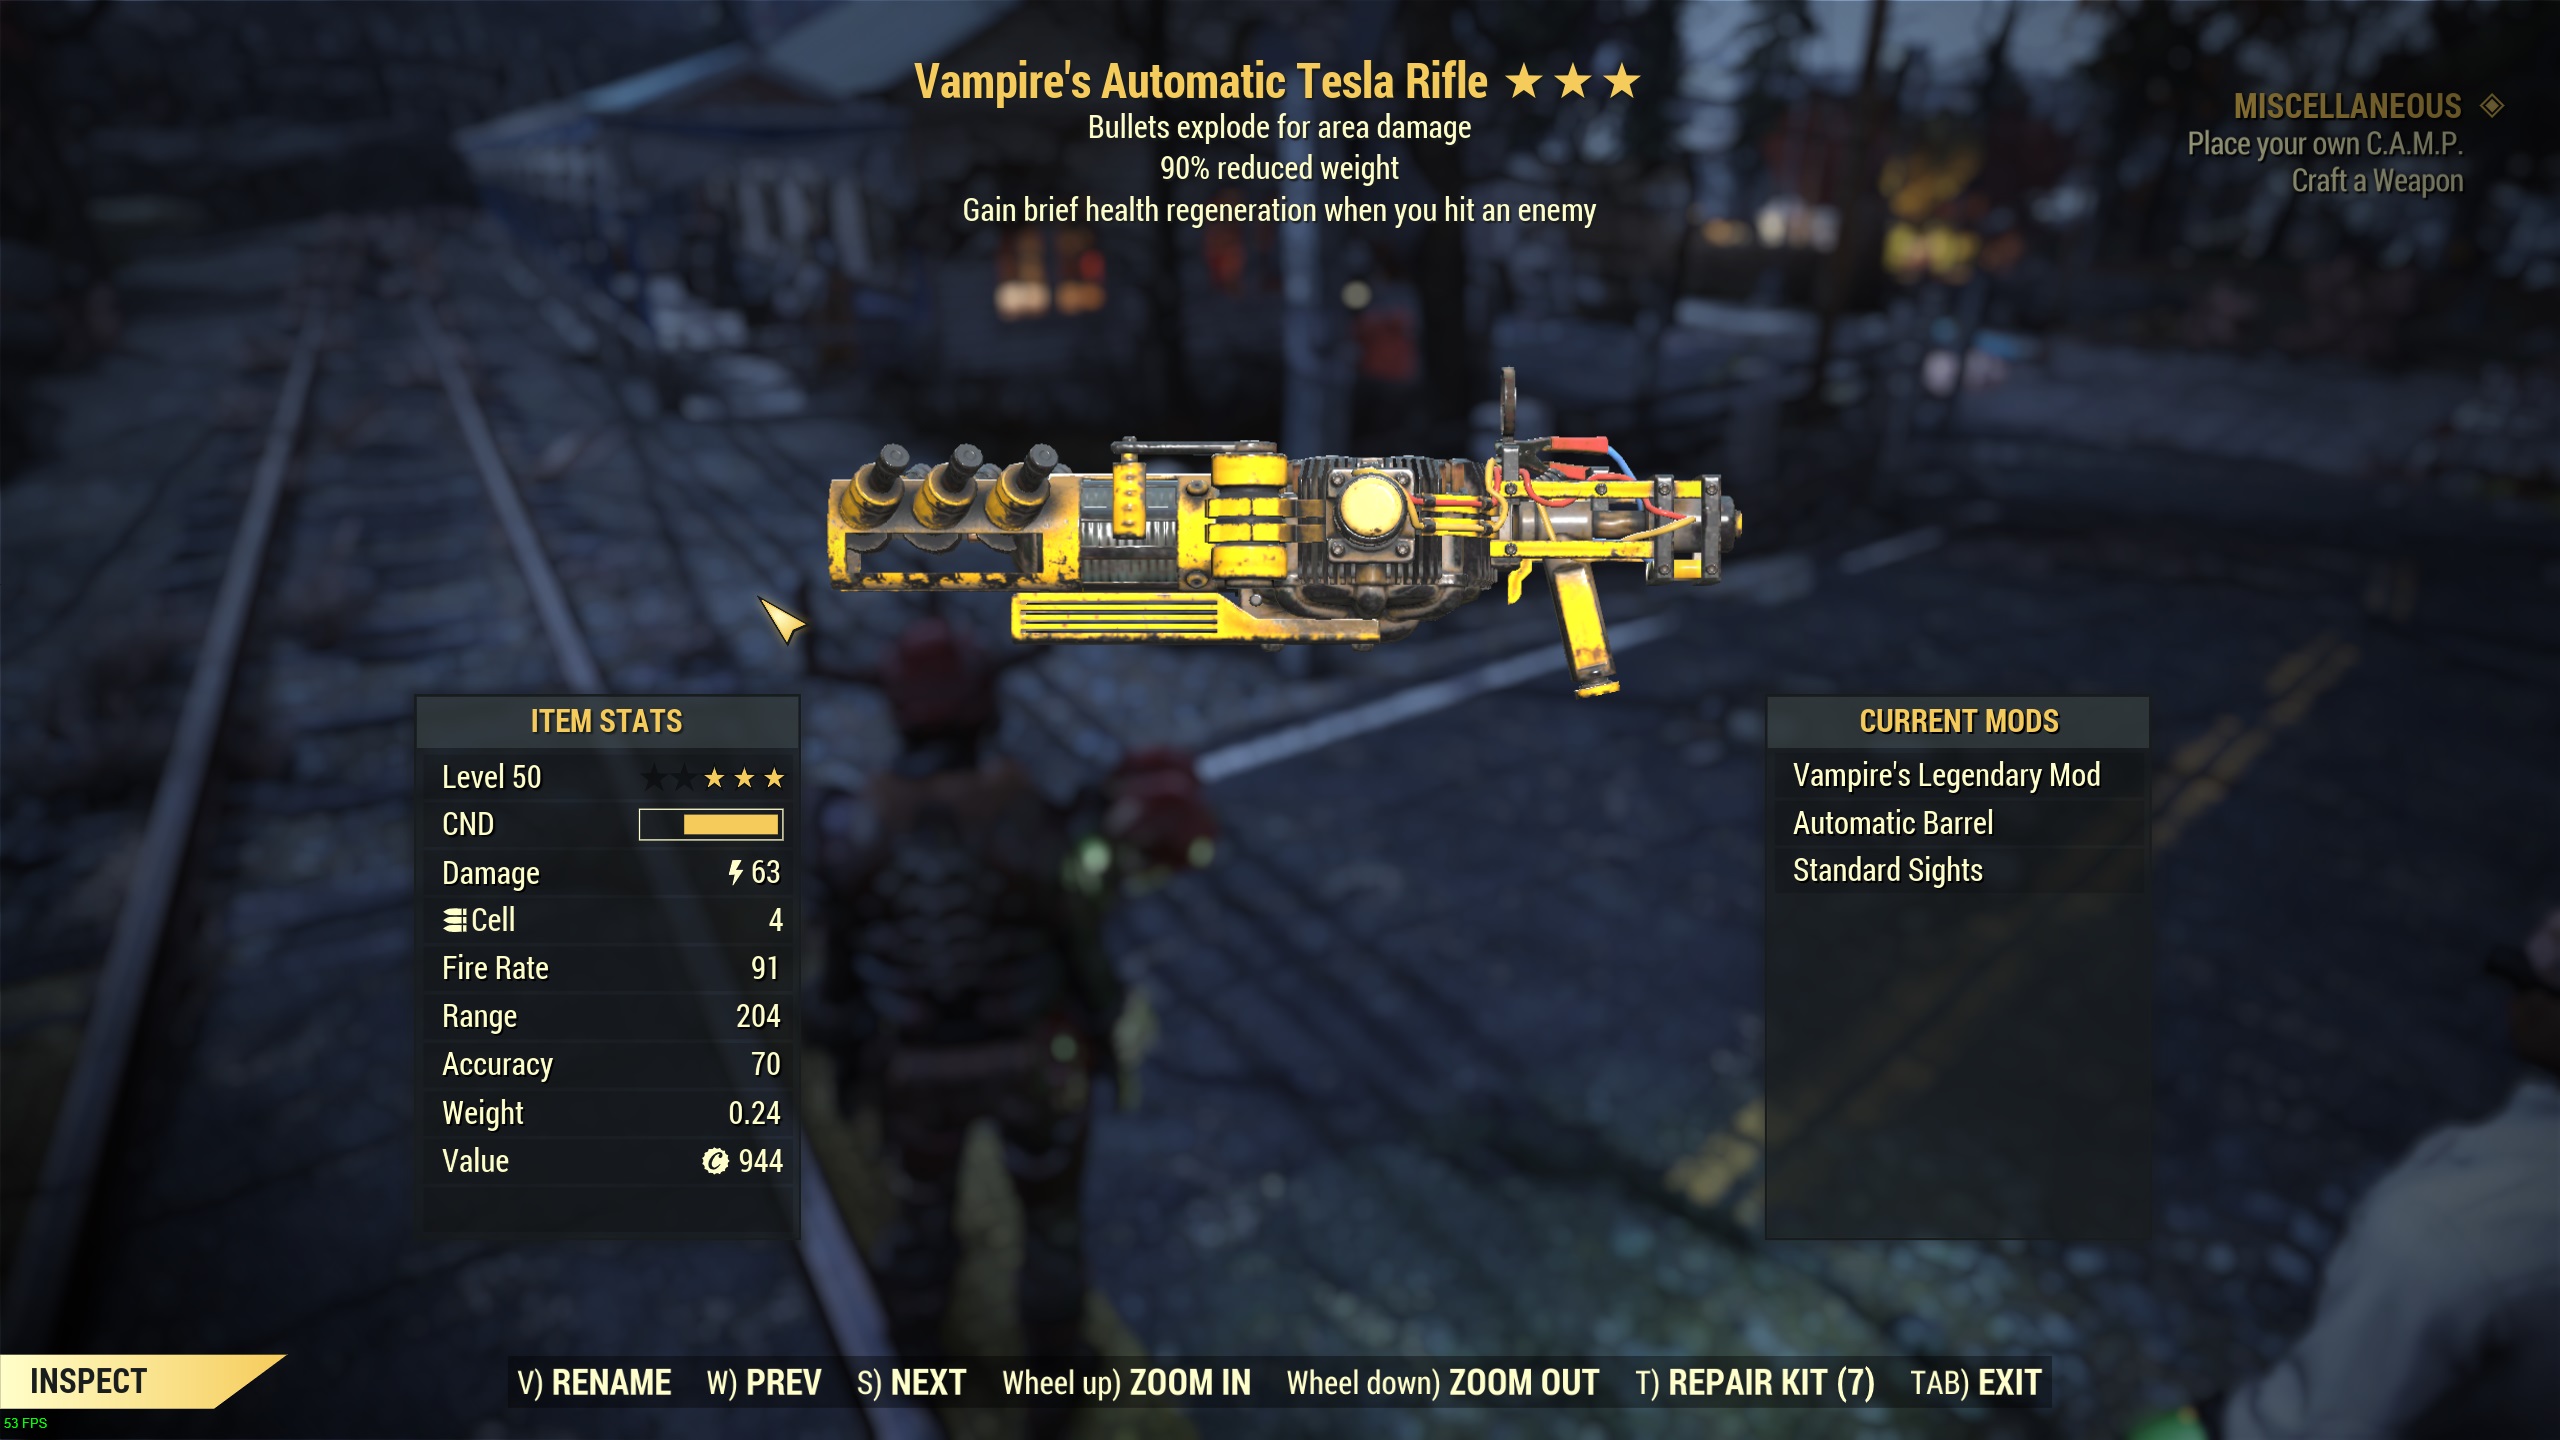 Vampire's Explosive Tesla Rifle [90% reduced weight]